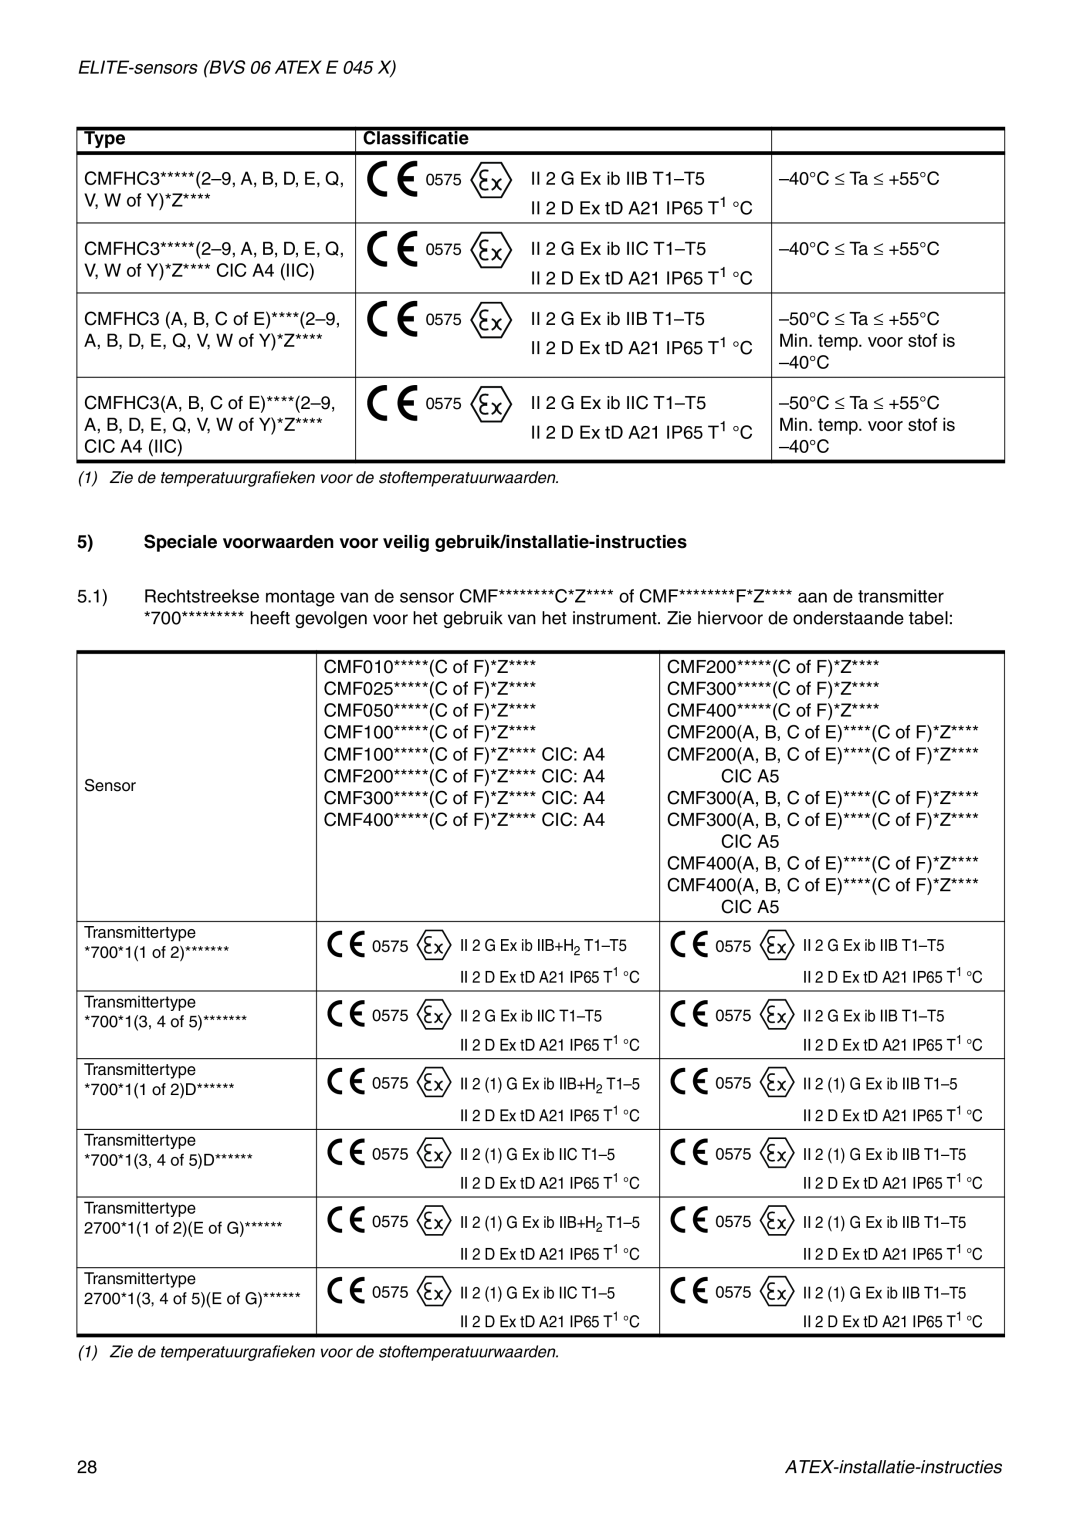 Emerson Process Management MMI-20010080 manual Type, Classificatie 